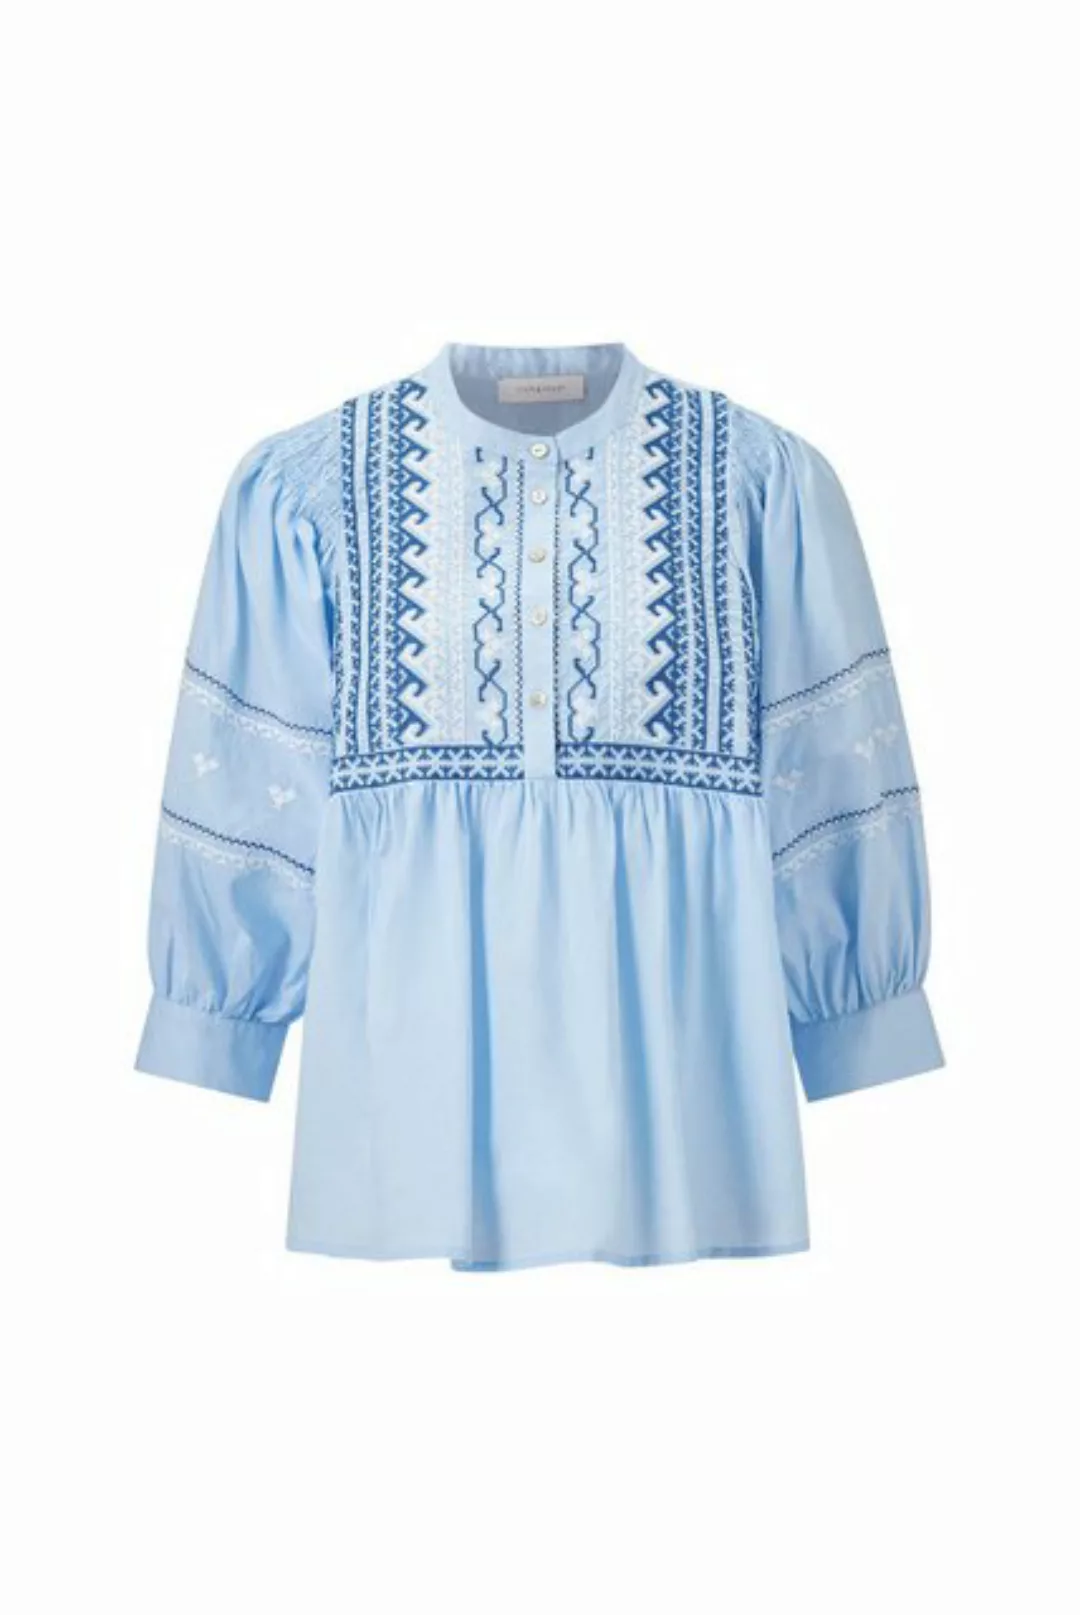 Rich & Royal Blusenshirt blouse with embroidery organic günstig online kaufen